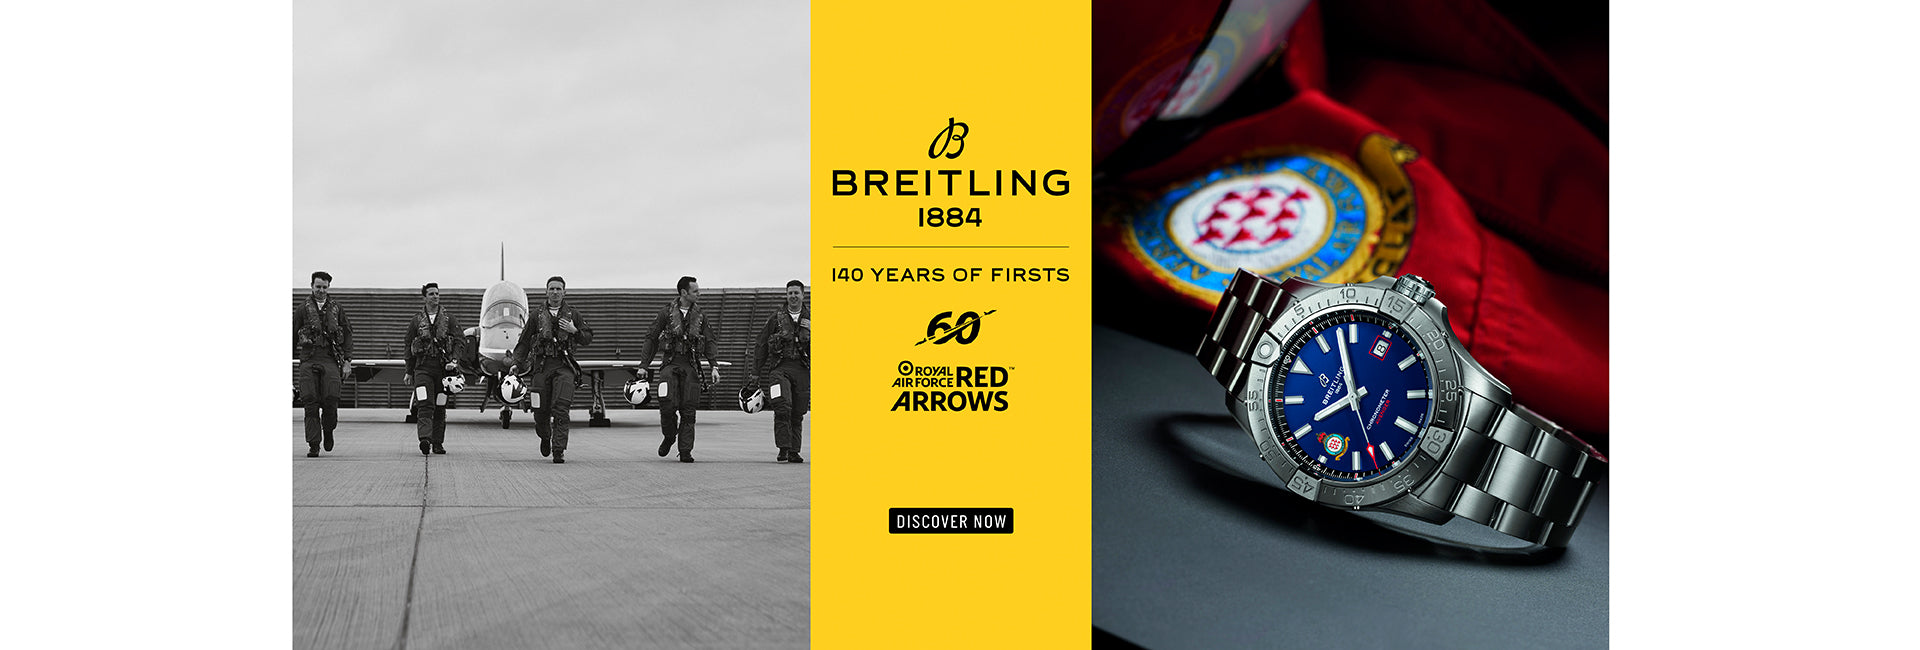 Breitling homepage